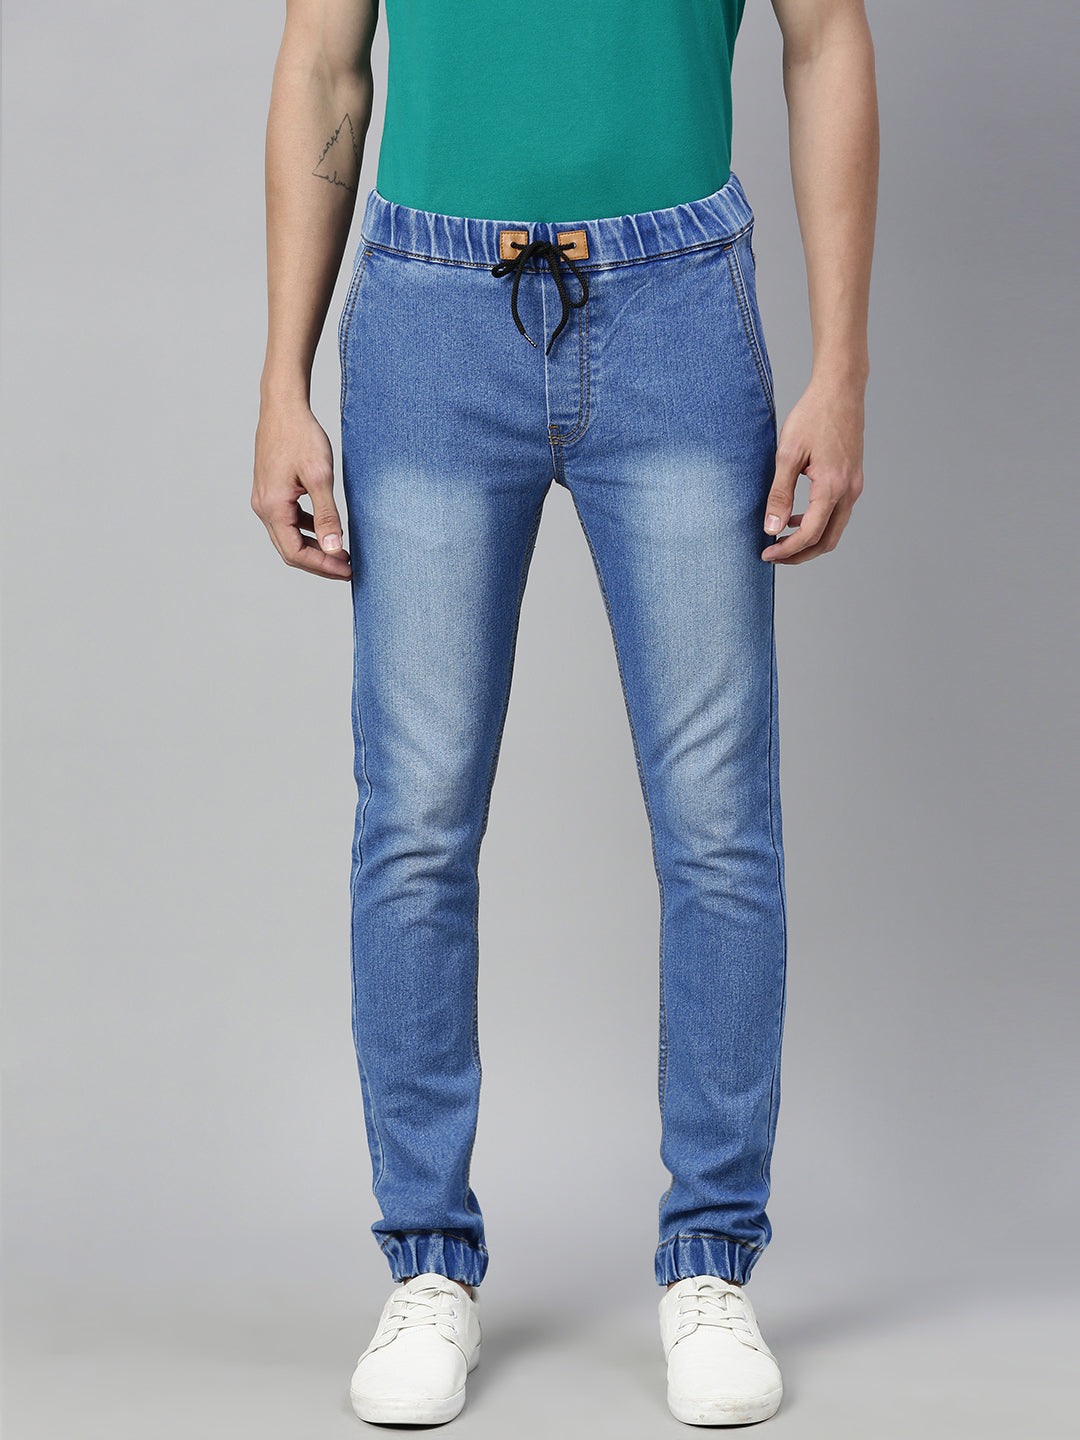 Urbano Fashion Men's Light Blue Slim Fit Washed Jogger Jeans Stretch